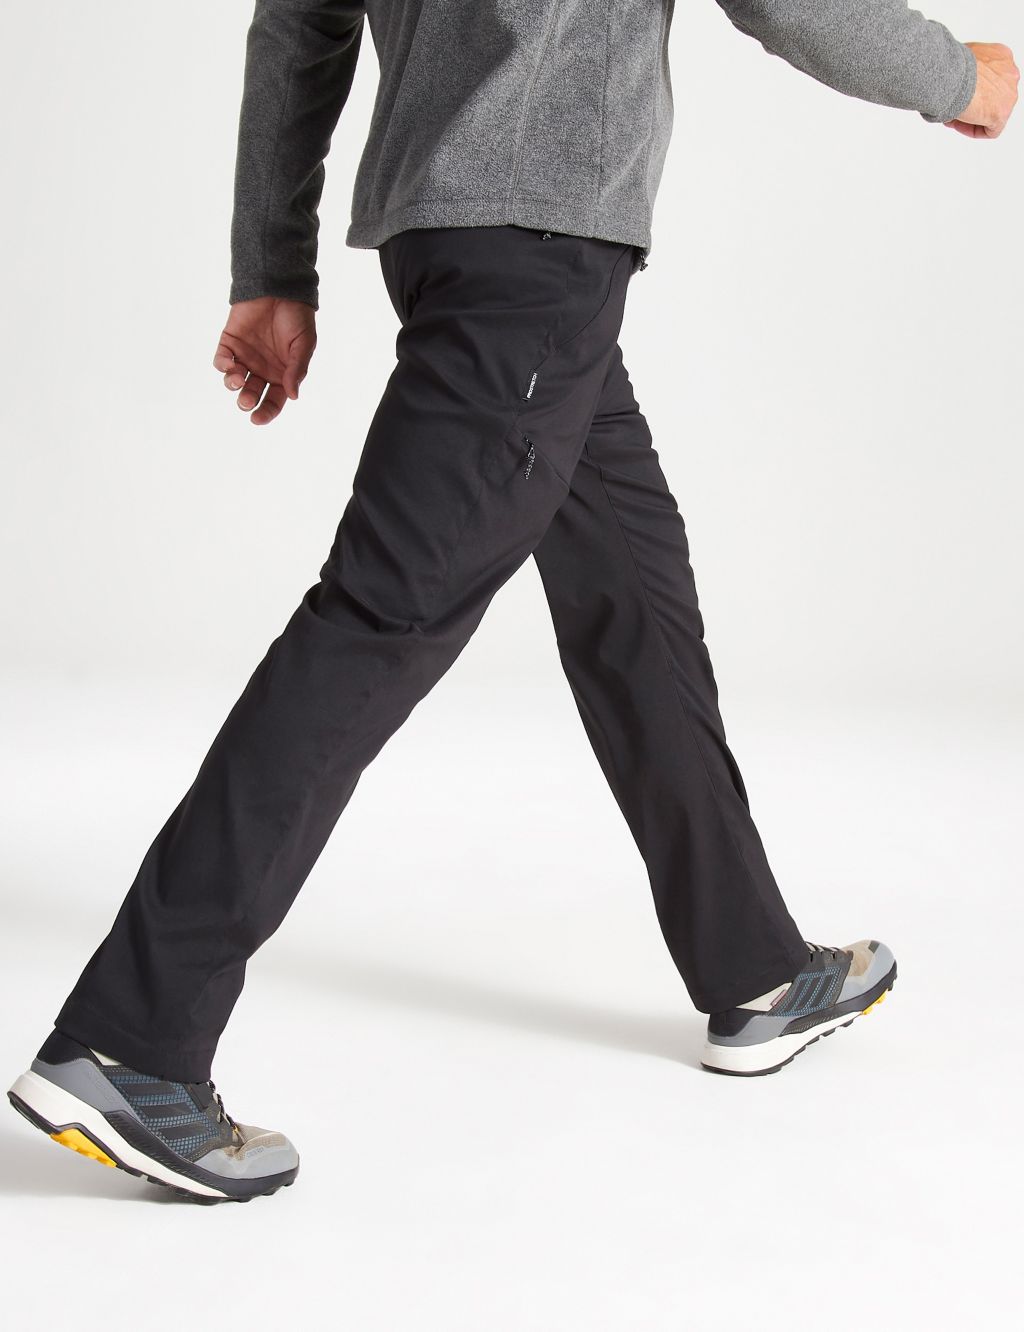 Kiwi Tailored Fit Trekking Trousers image 4